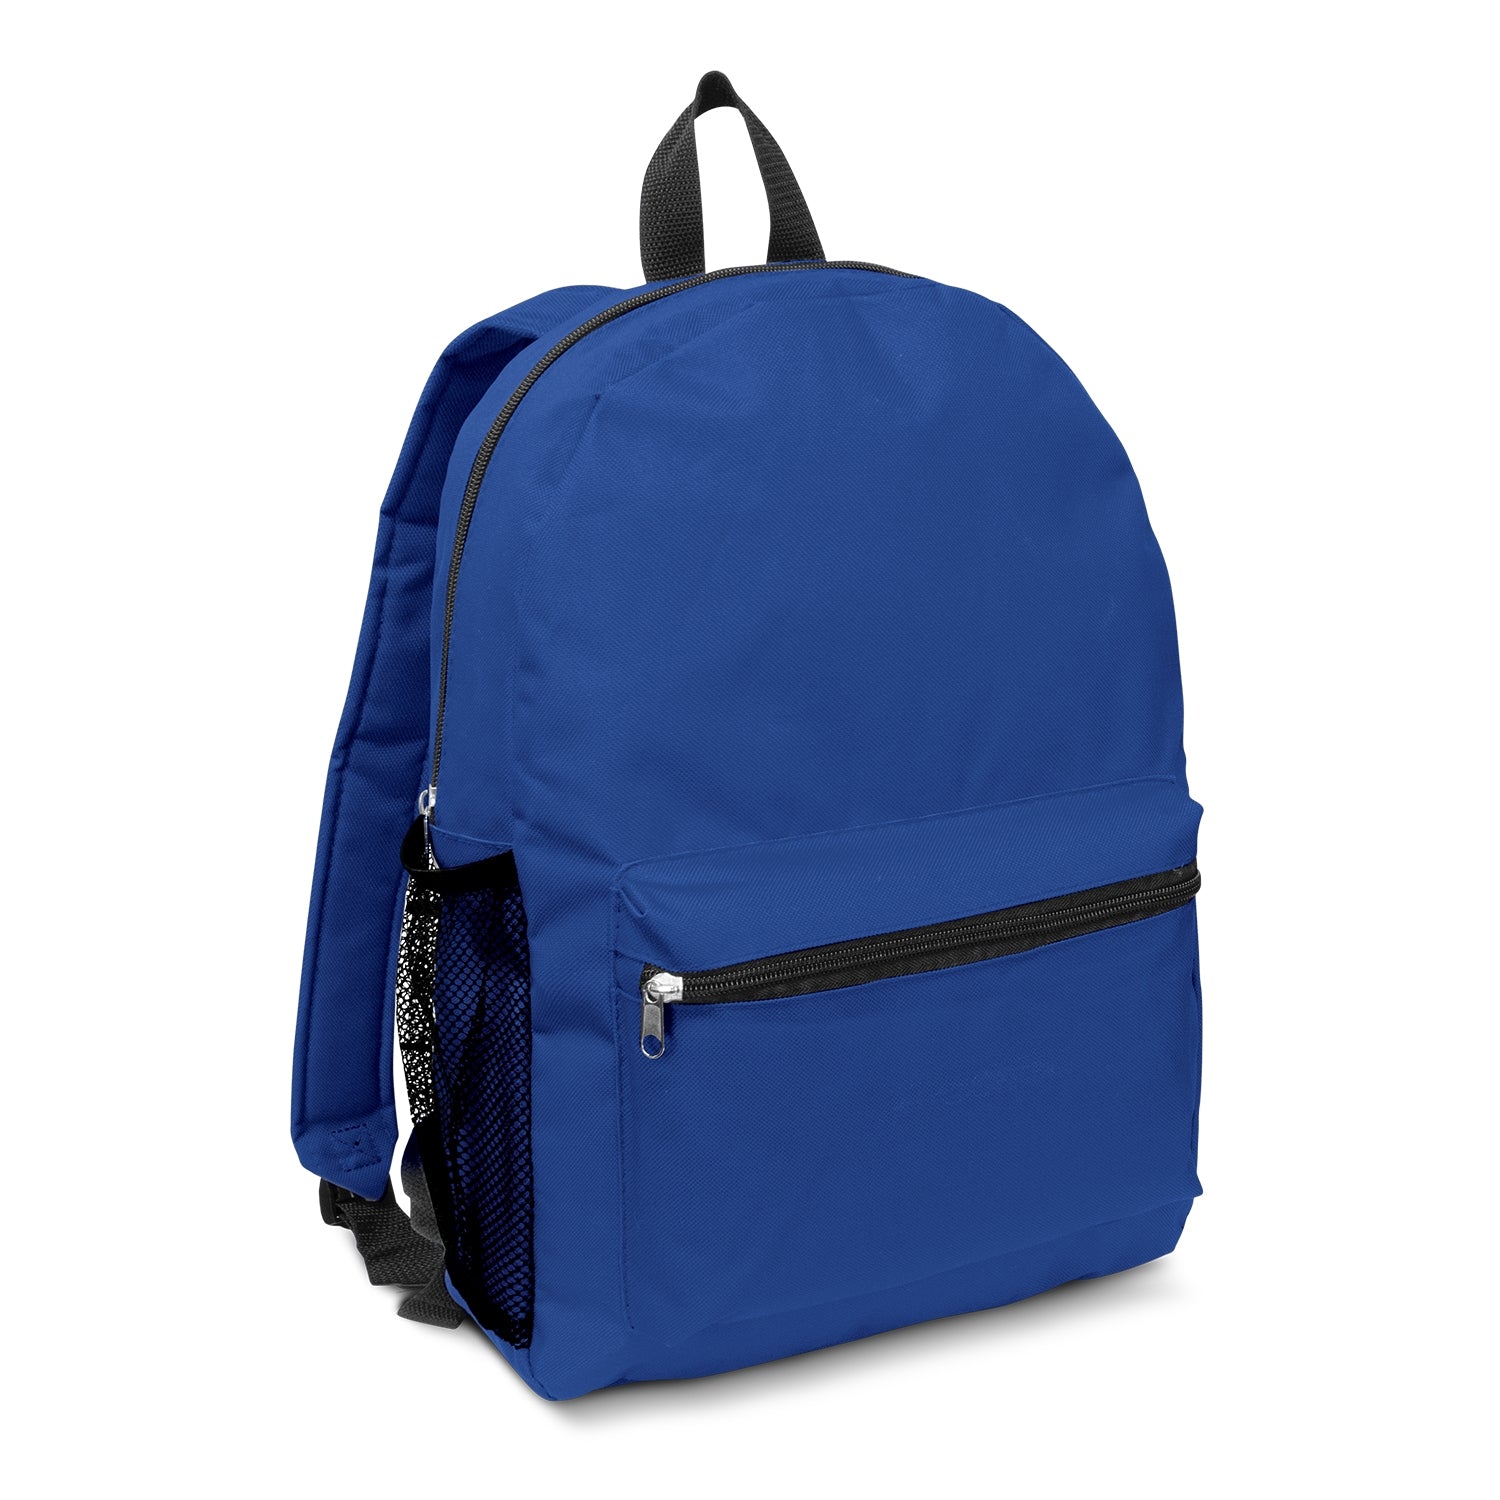 Scholar Backpack [115882]